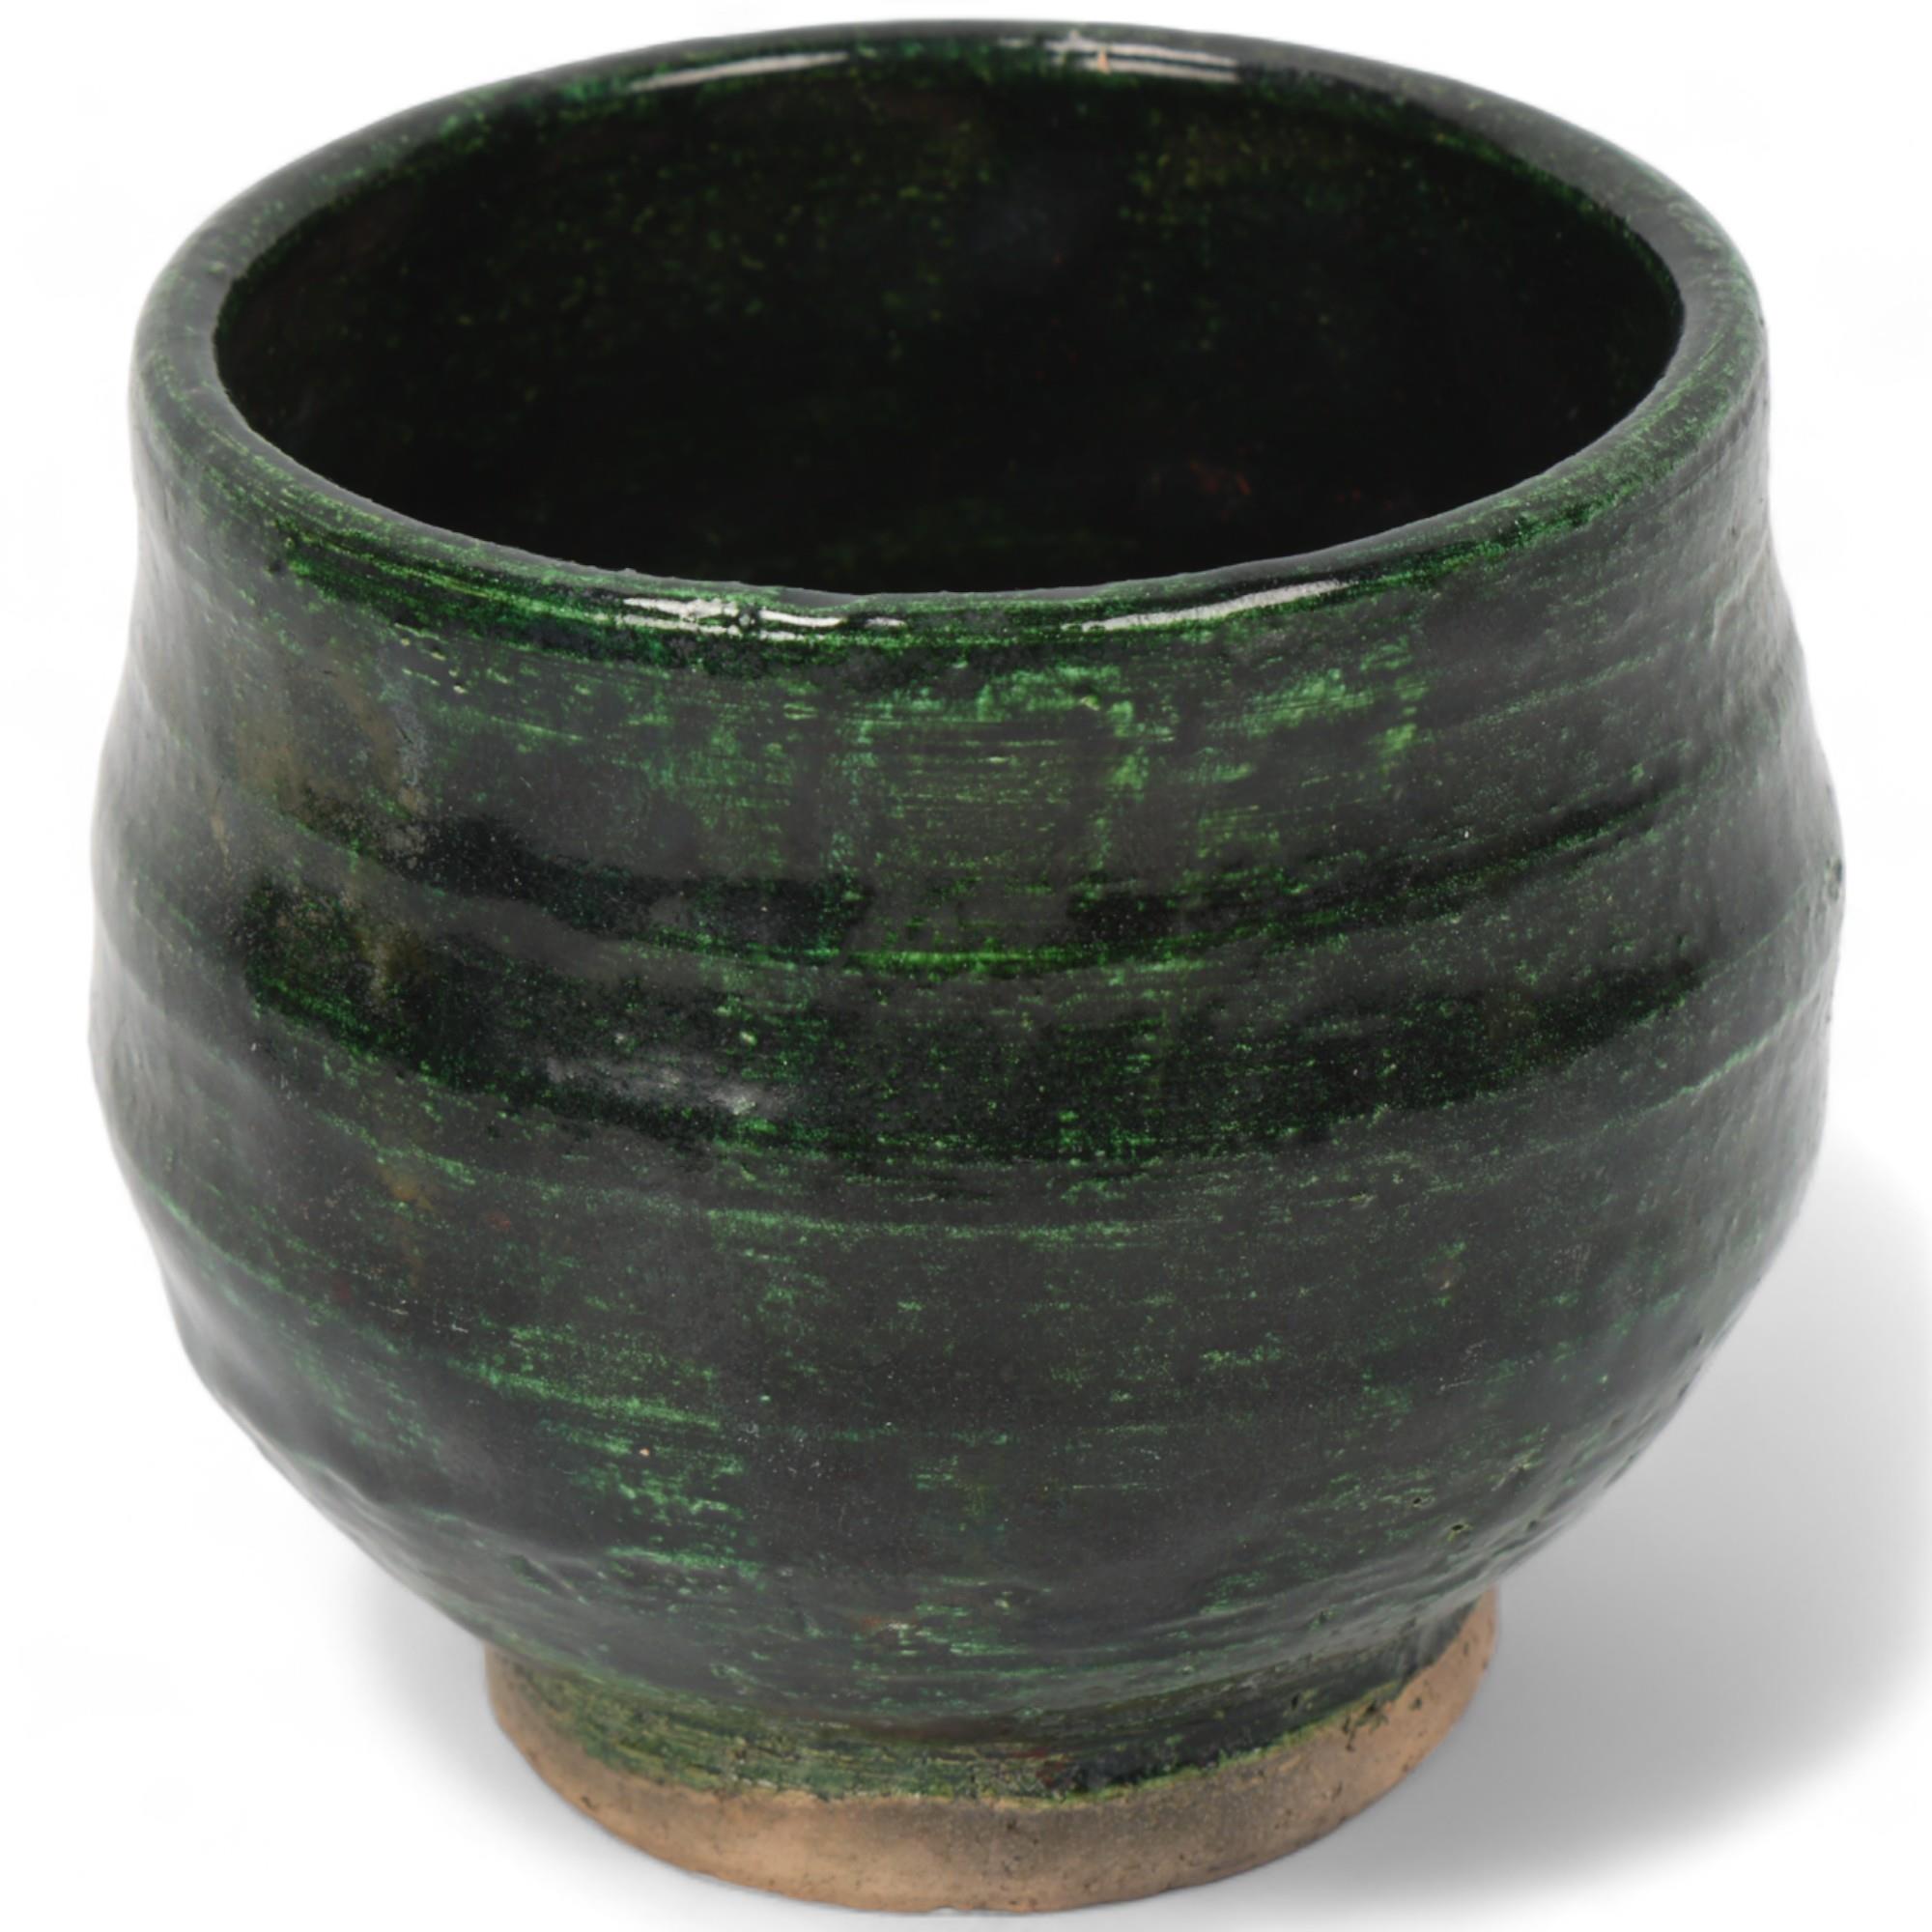 DAVID LEACH (1911-2005), Lowerdown Pottery, a green glazed tea bowl, Lowerdown mark impressed to